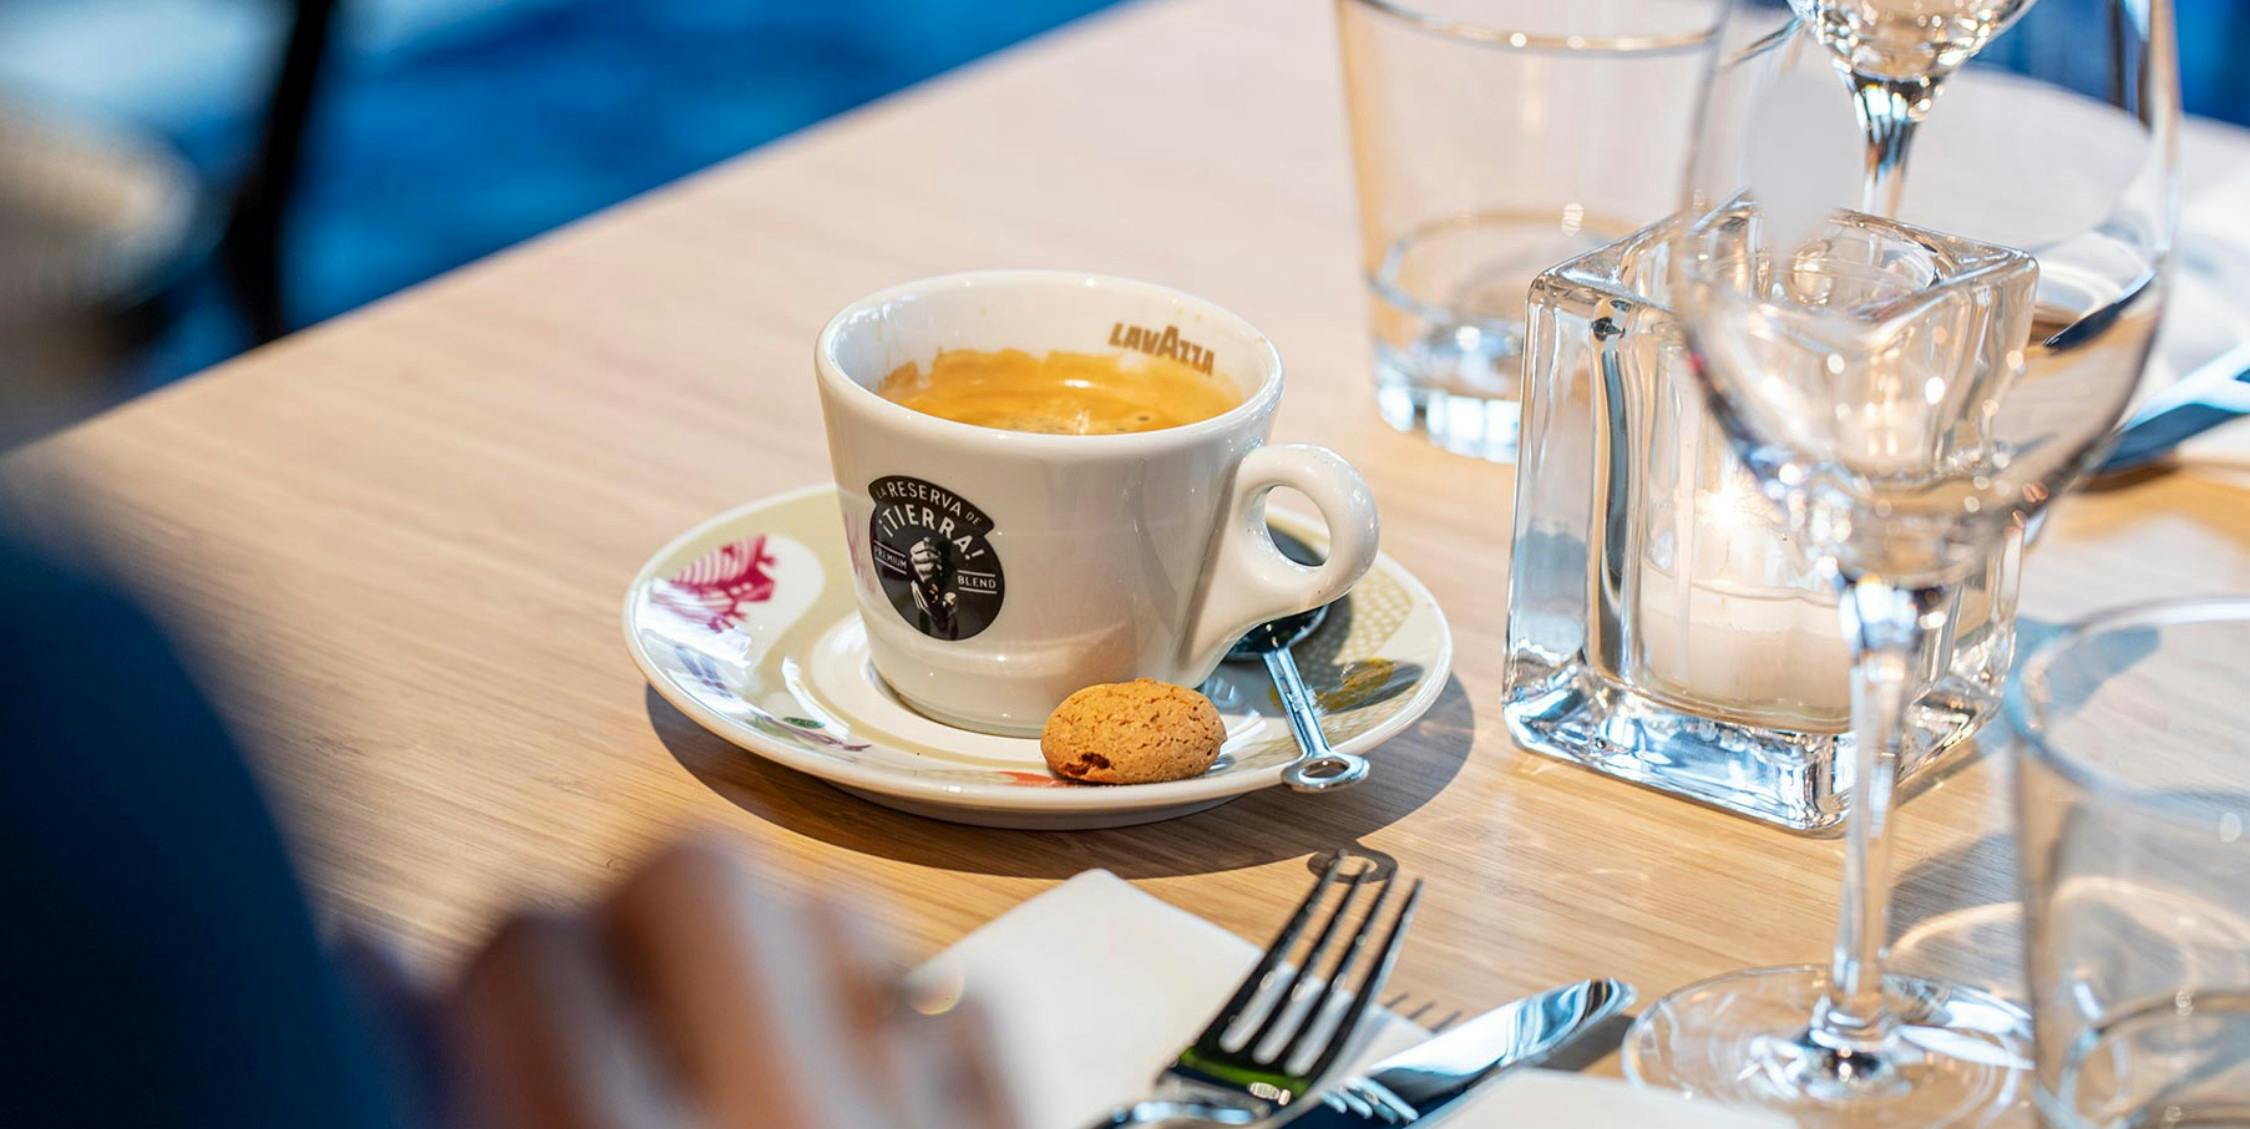 Lavazza Café en grains expresso barista intense 500g - Hollande Supermarché